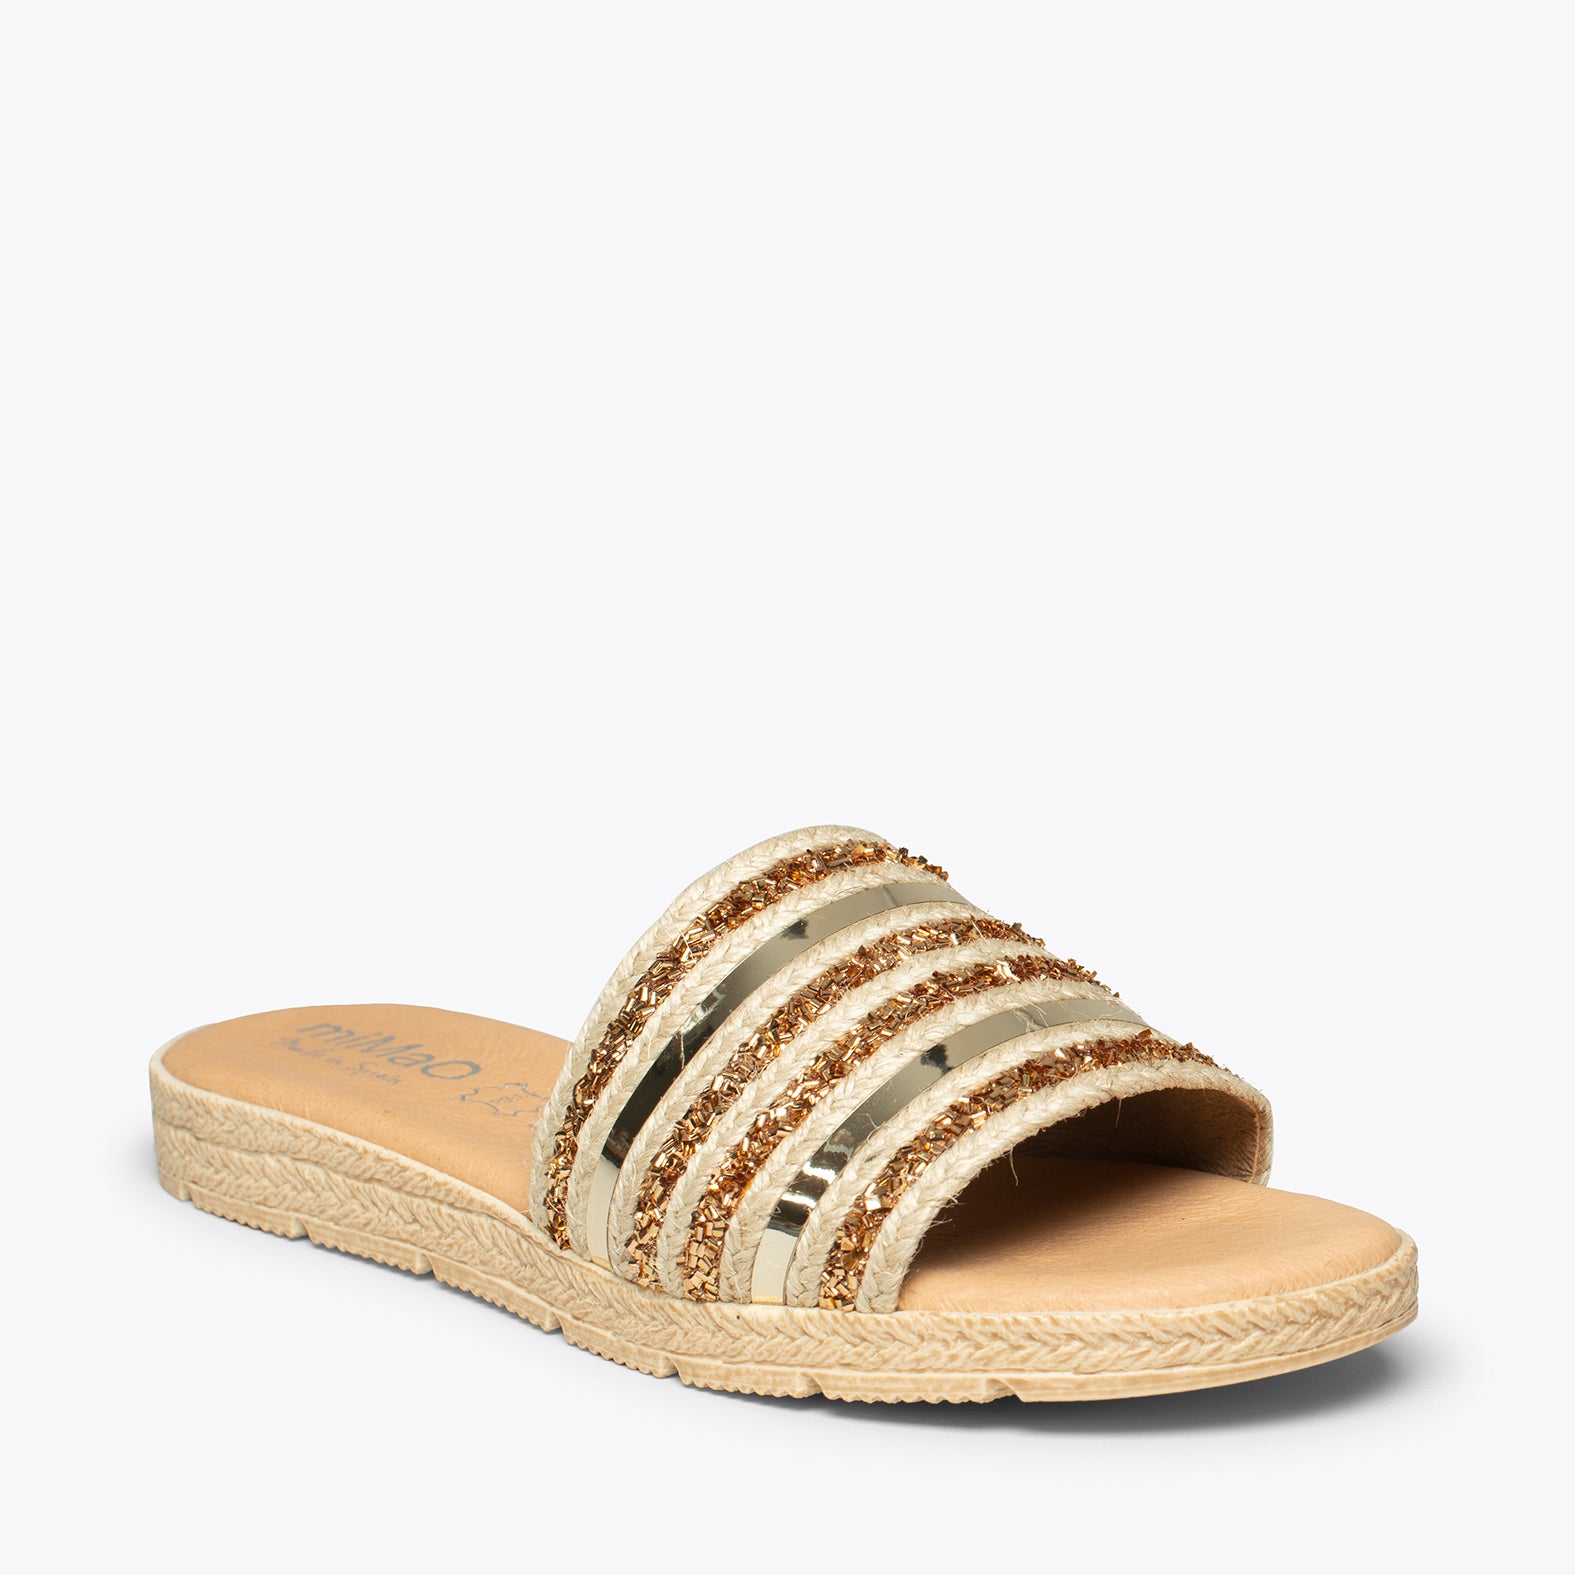 MOON – GOLD flat sandal with metallic details